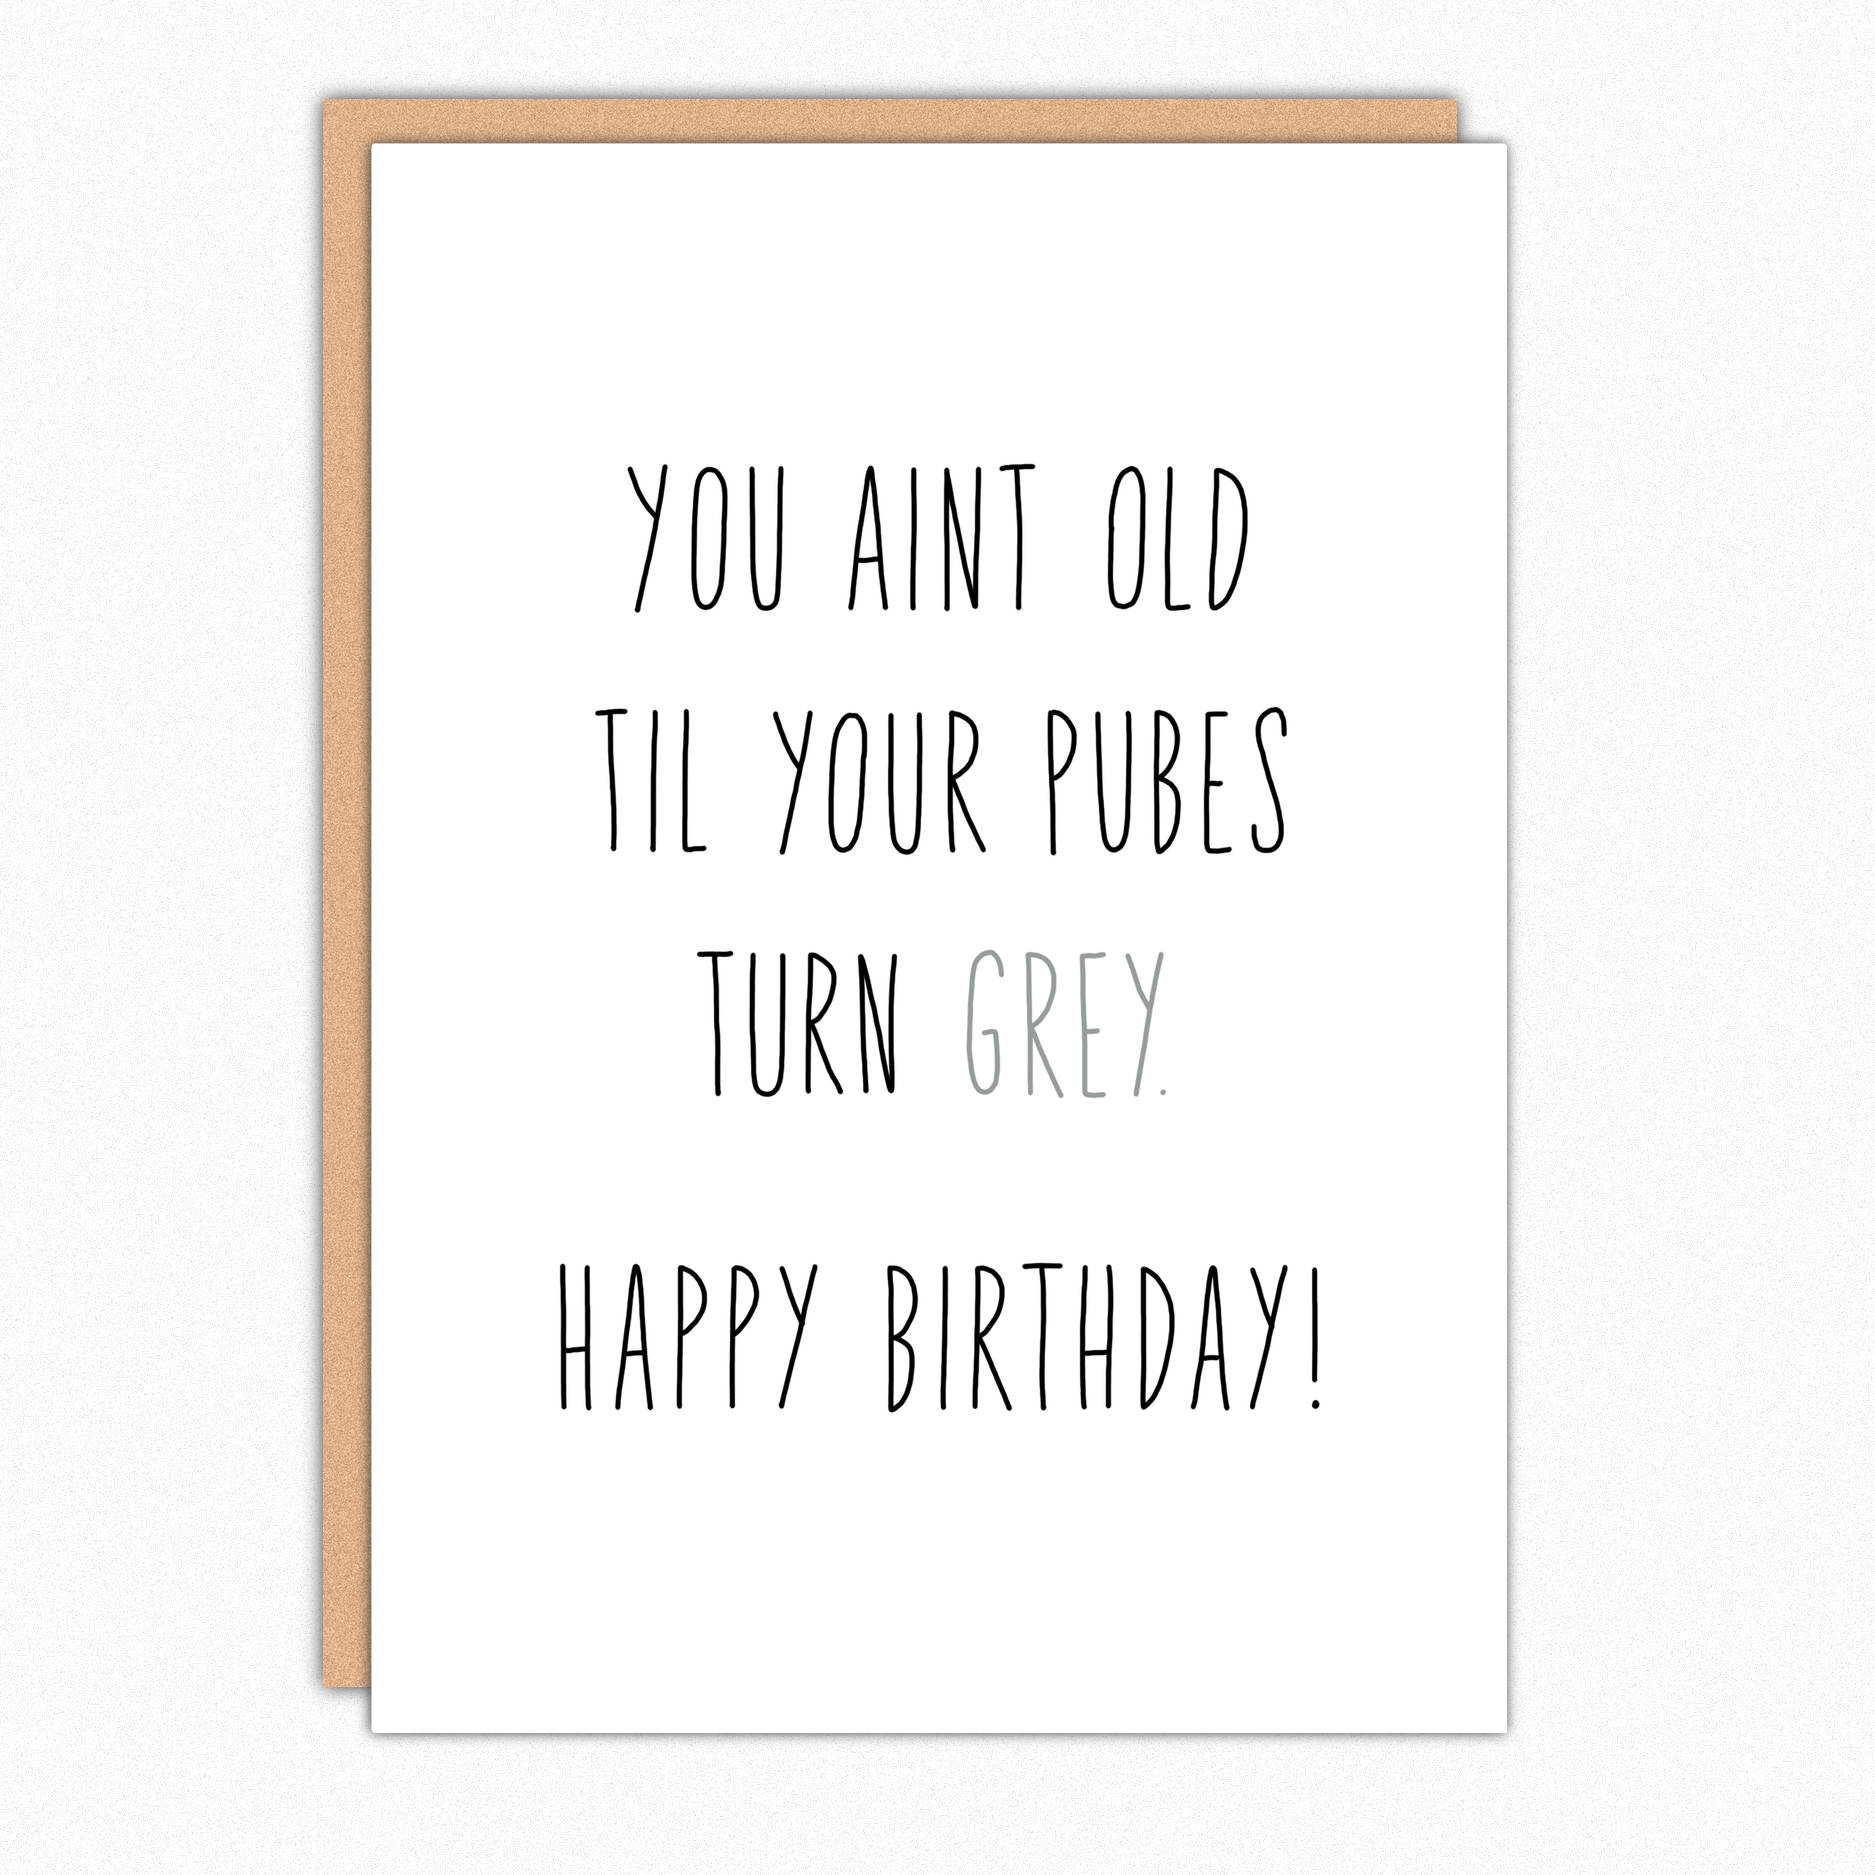 30Th Birthday Card Ideas Funny Birthday Cards Funny Birthday Card 30th Birthday Cards 40th Birthday Cards Friend Birthday Card Funny Pubes Turn Grey 158